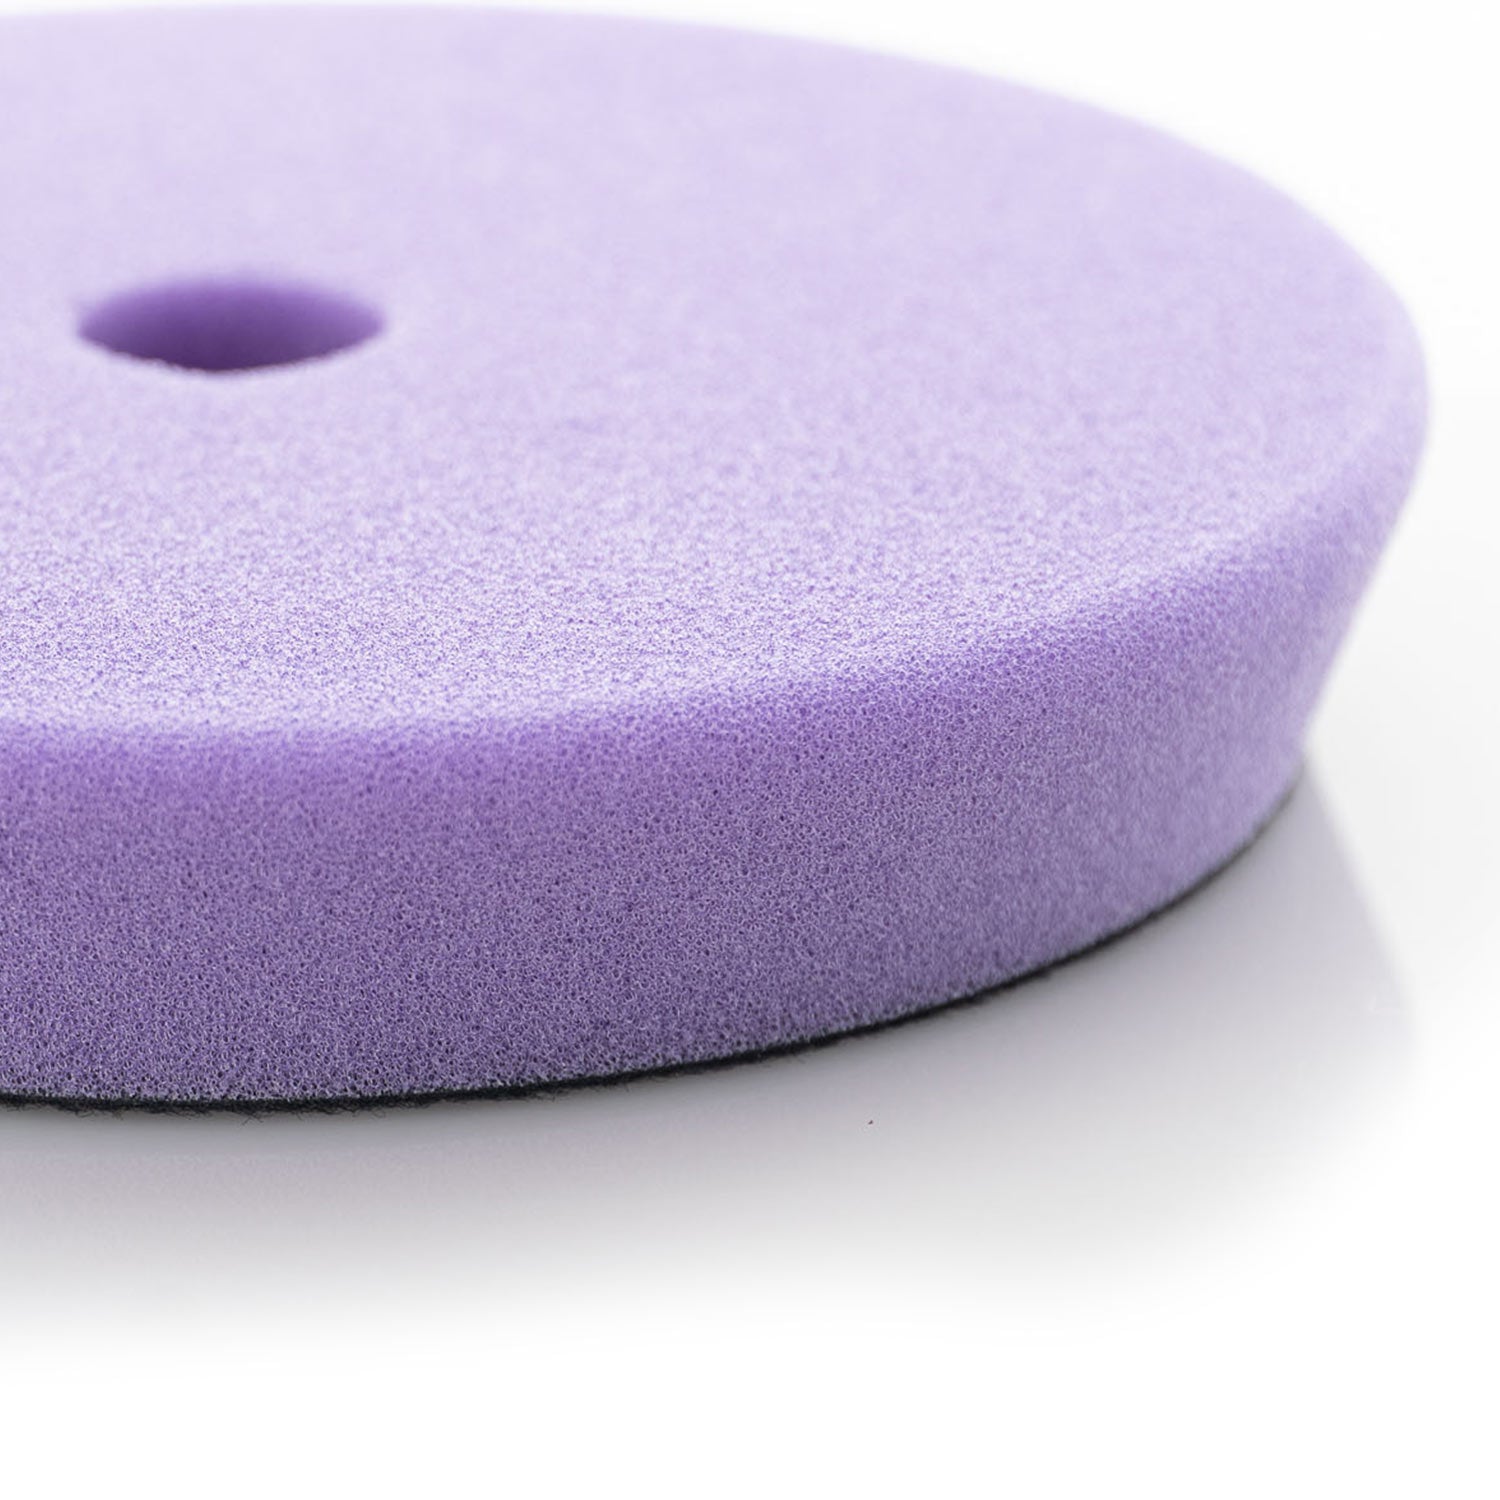 light-purple-buffing-pad-close-up